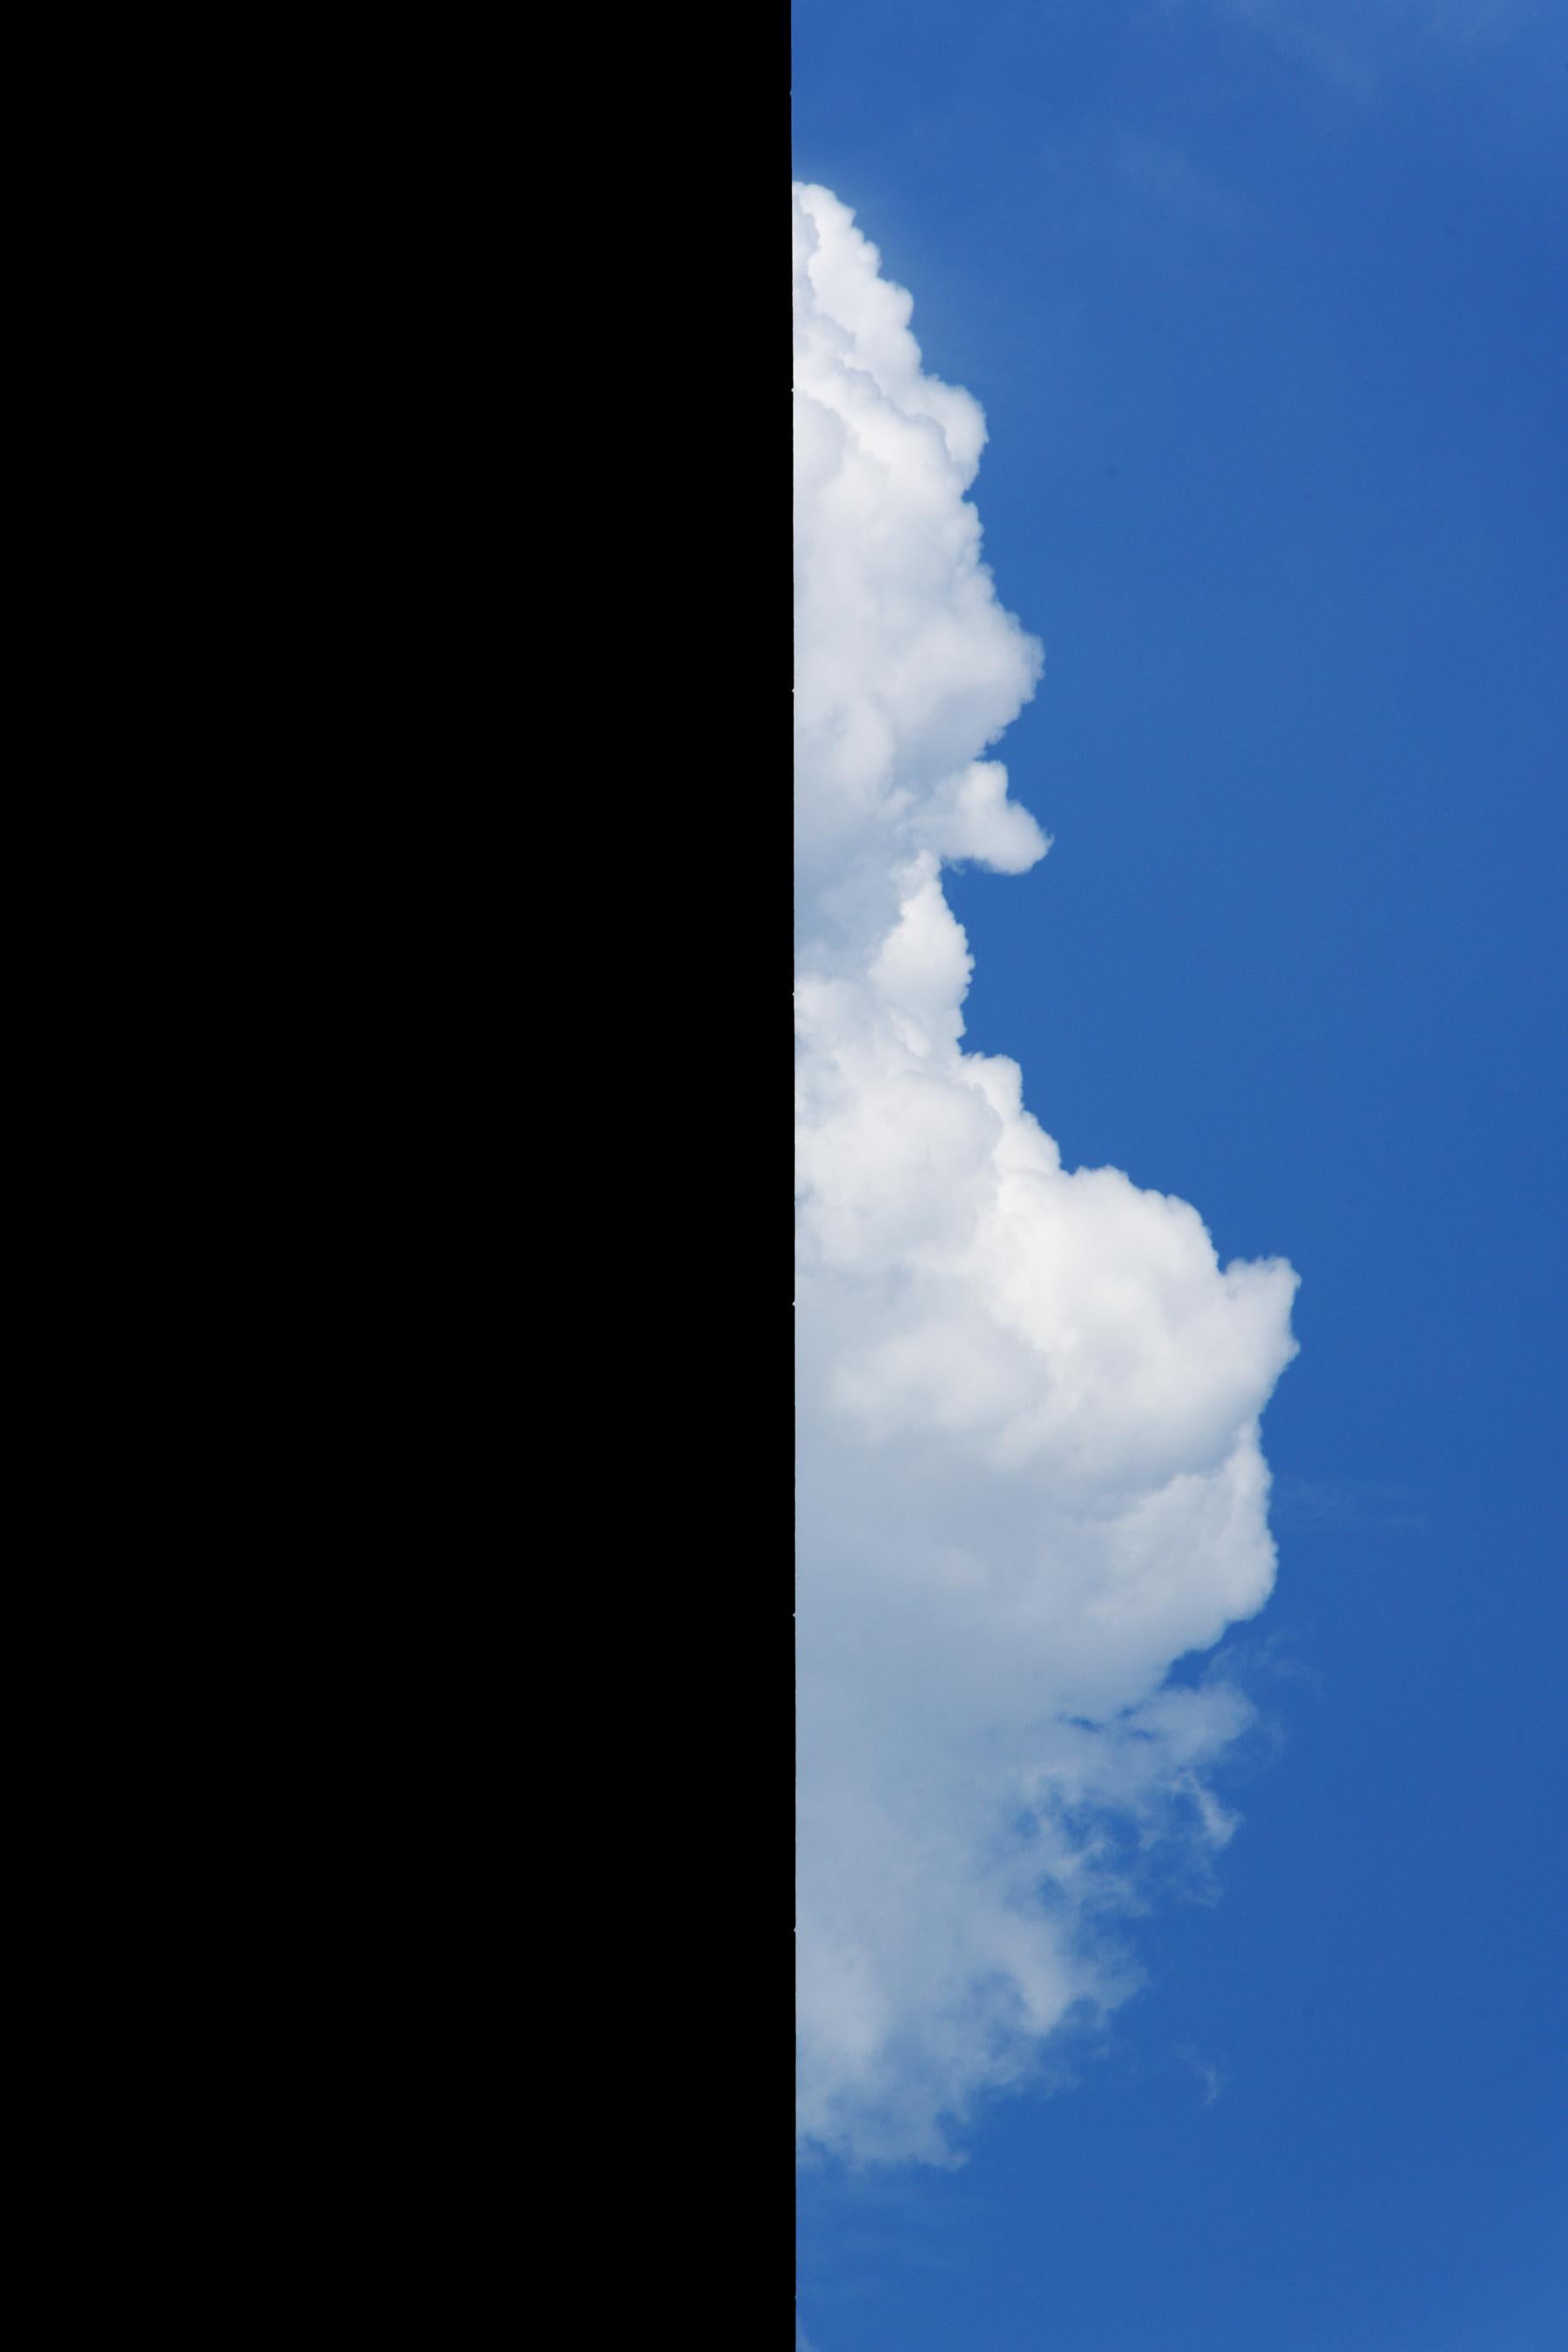 Bob Krasner Landscape Photograph - "Building With Cloud", photograph, city, architecture, geometry, blue sky shadow